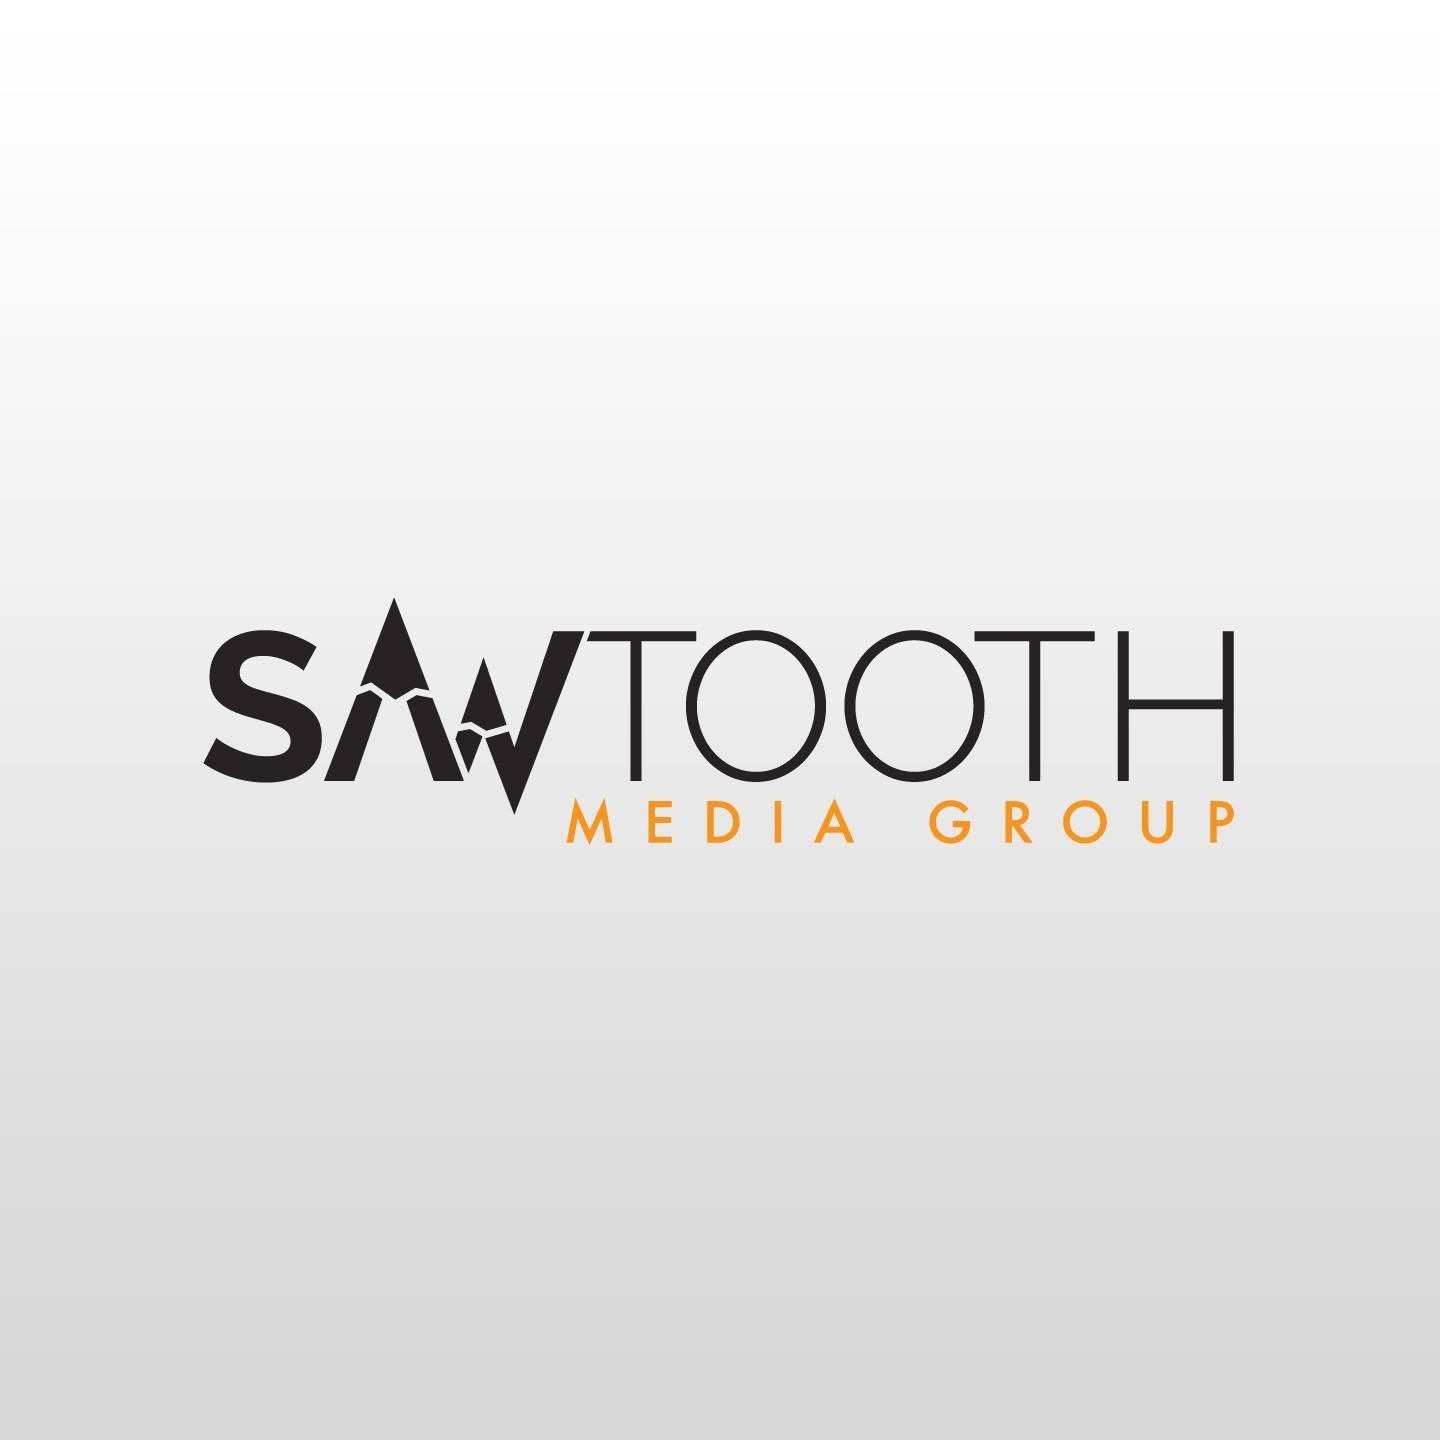 Sawtooth Media Group